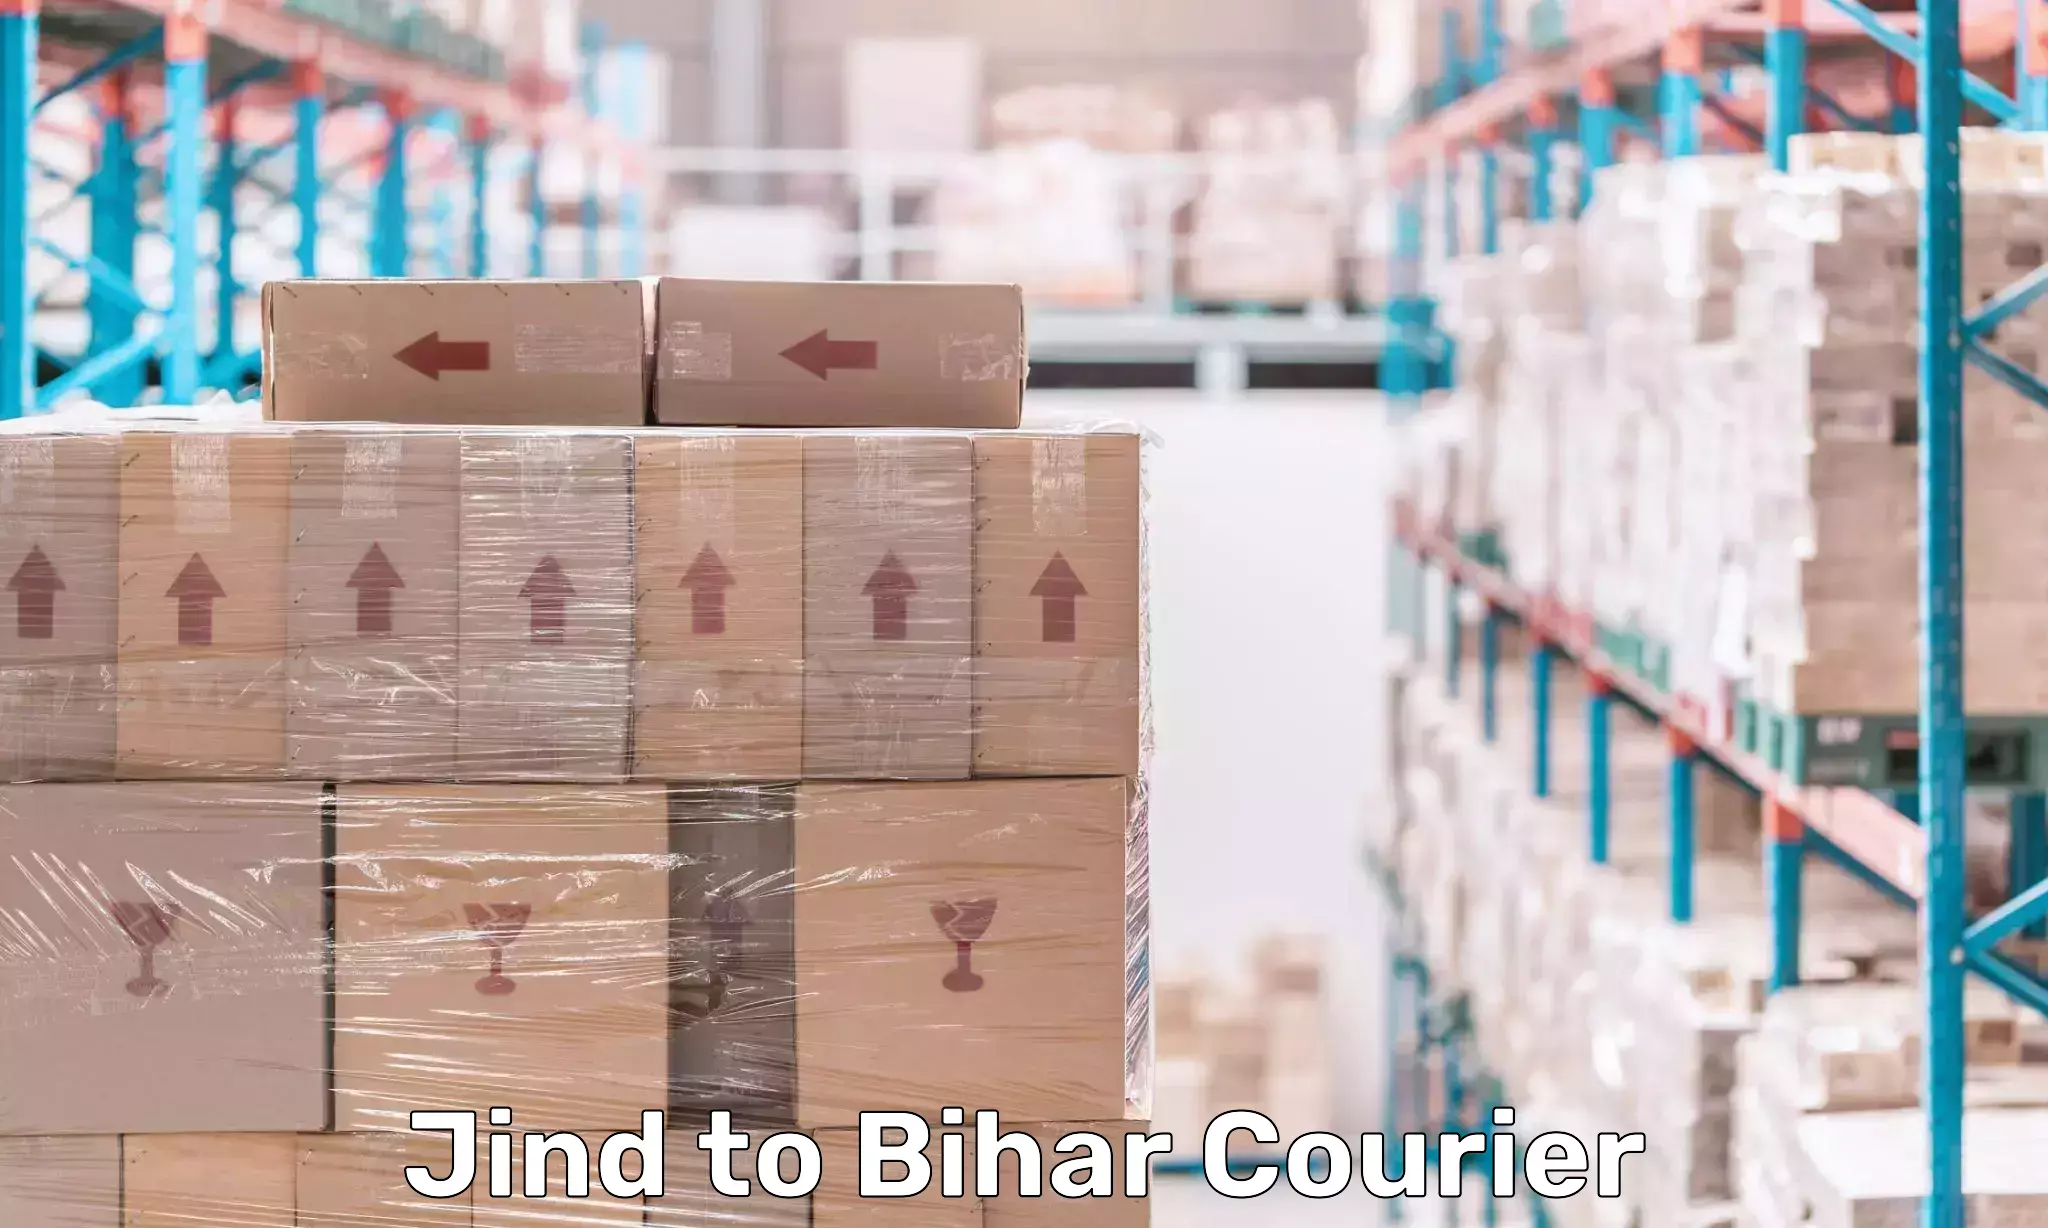 Global logistics network Jind to Baniapur